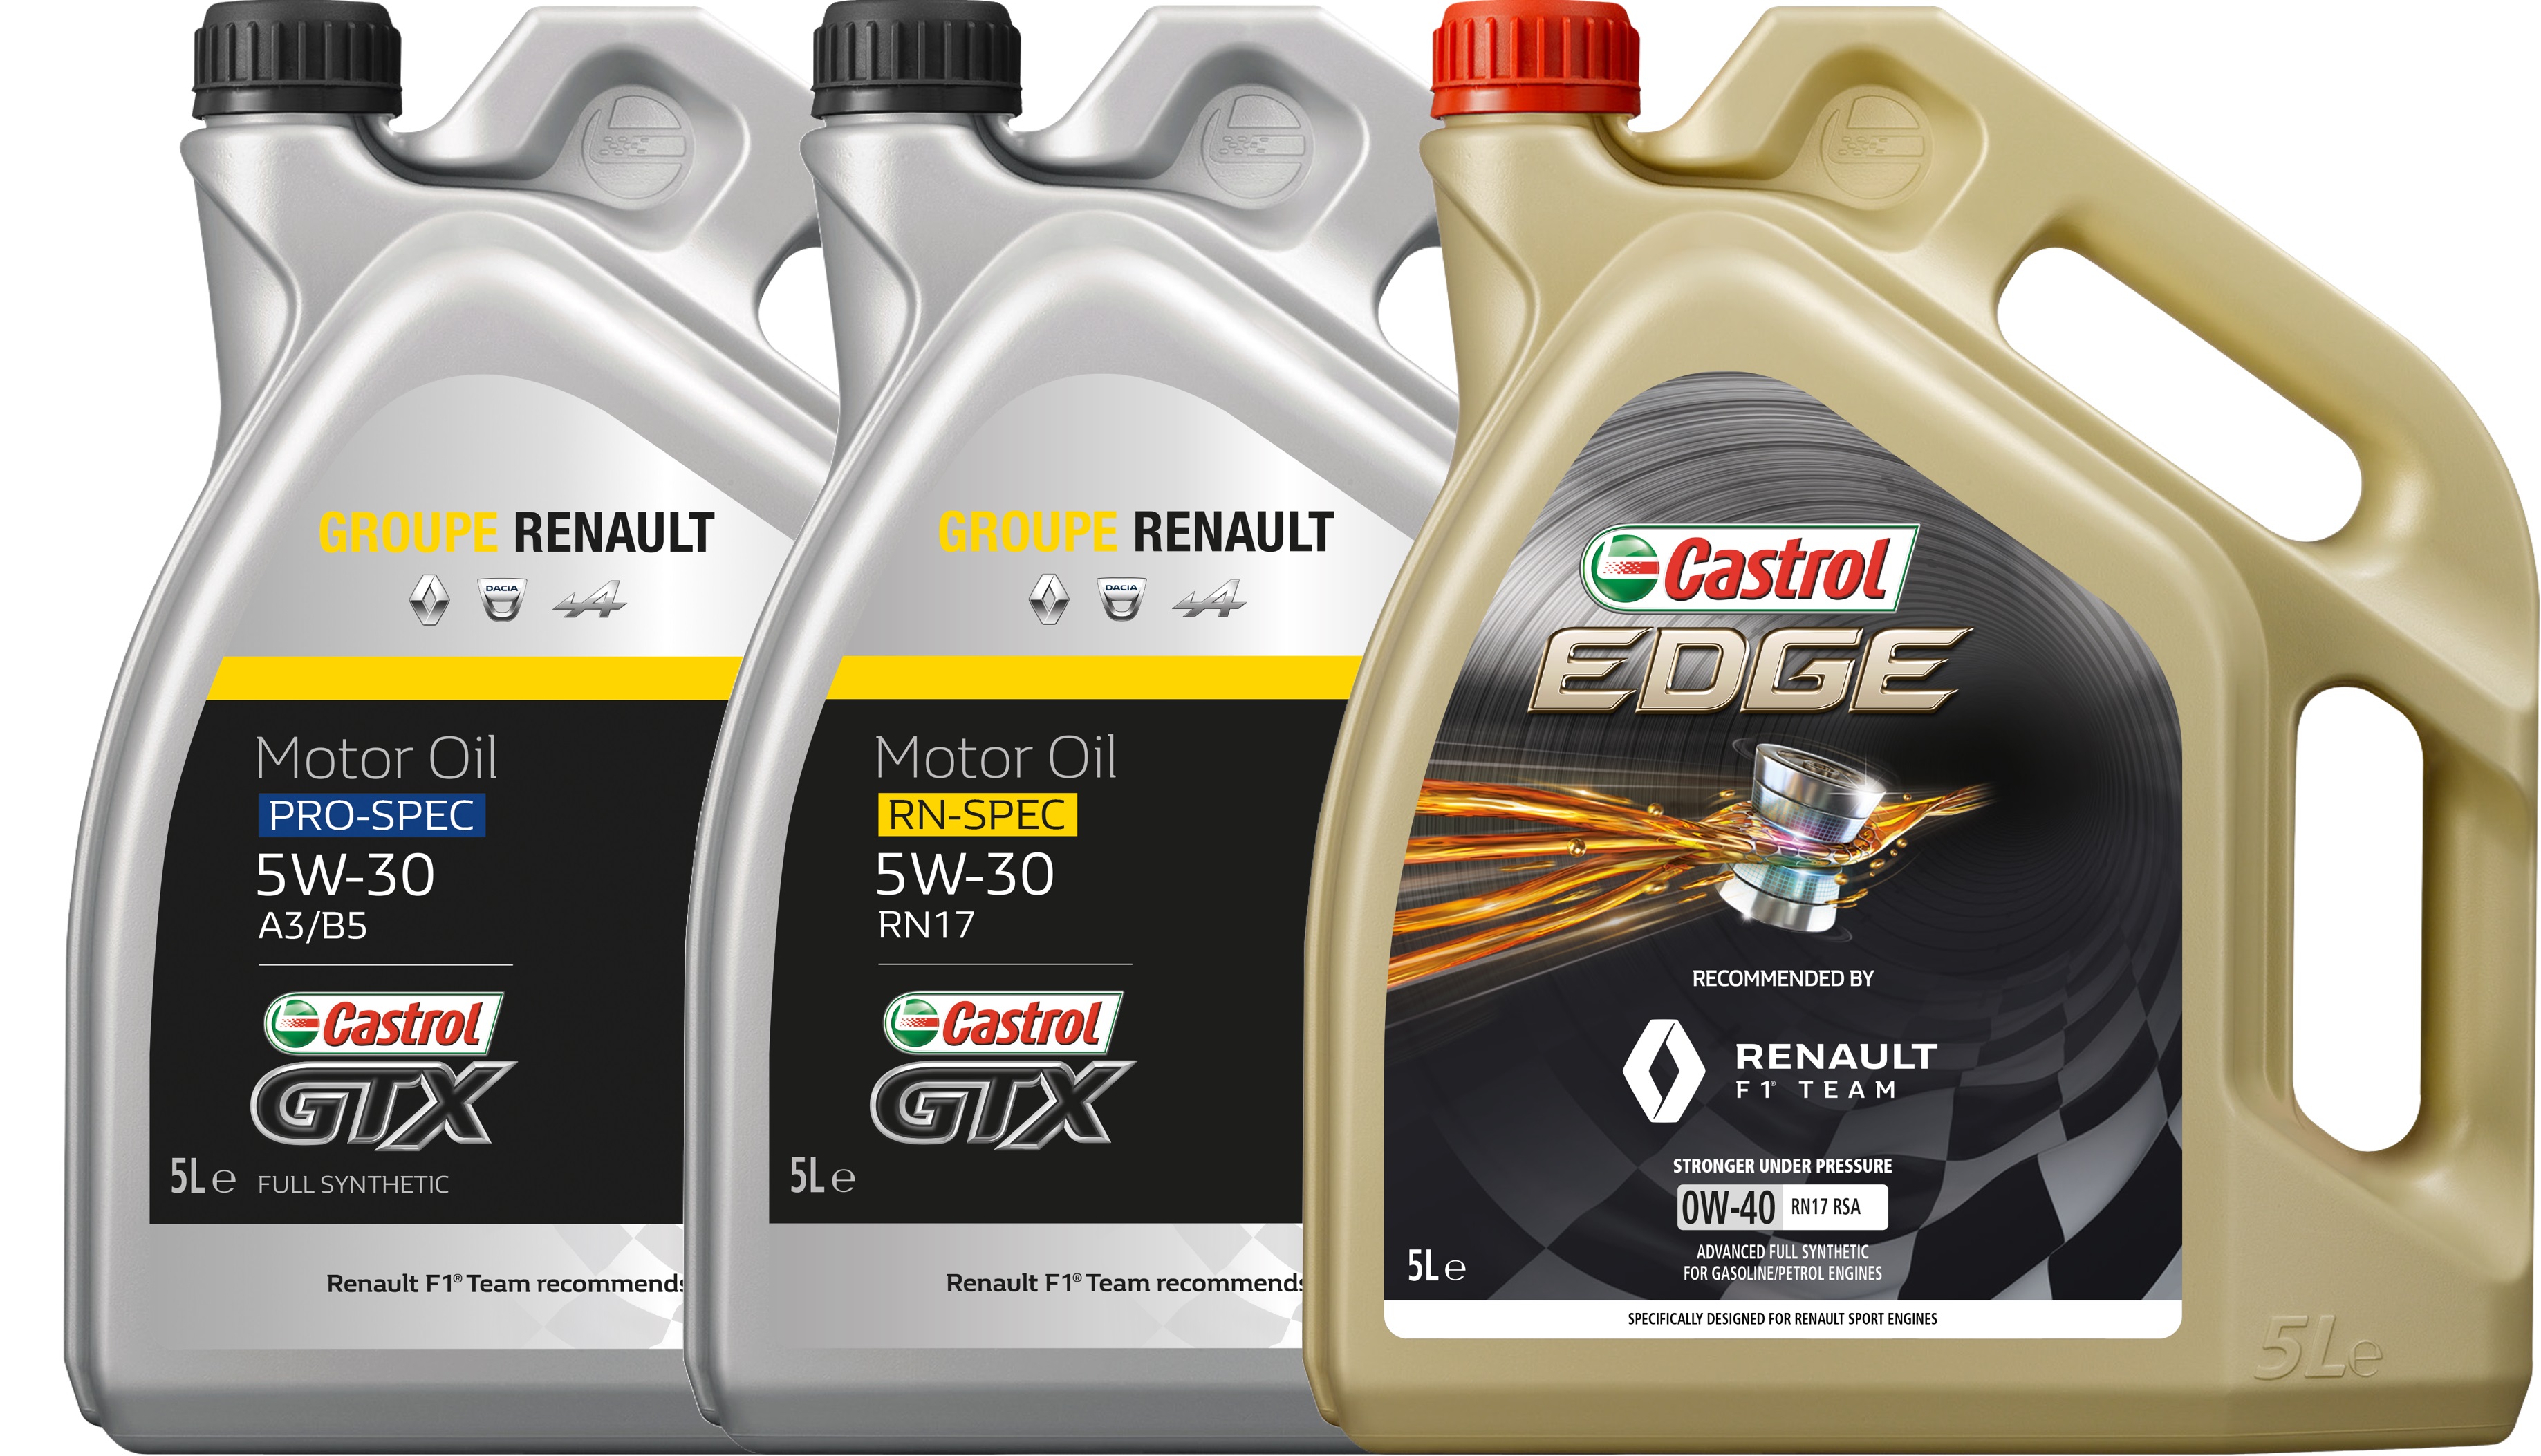 Castrol and Renault range jpg